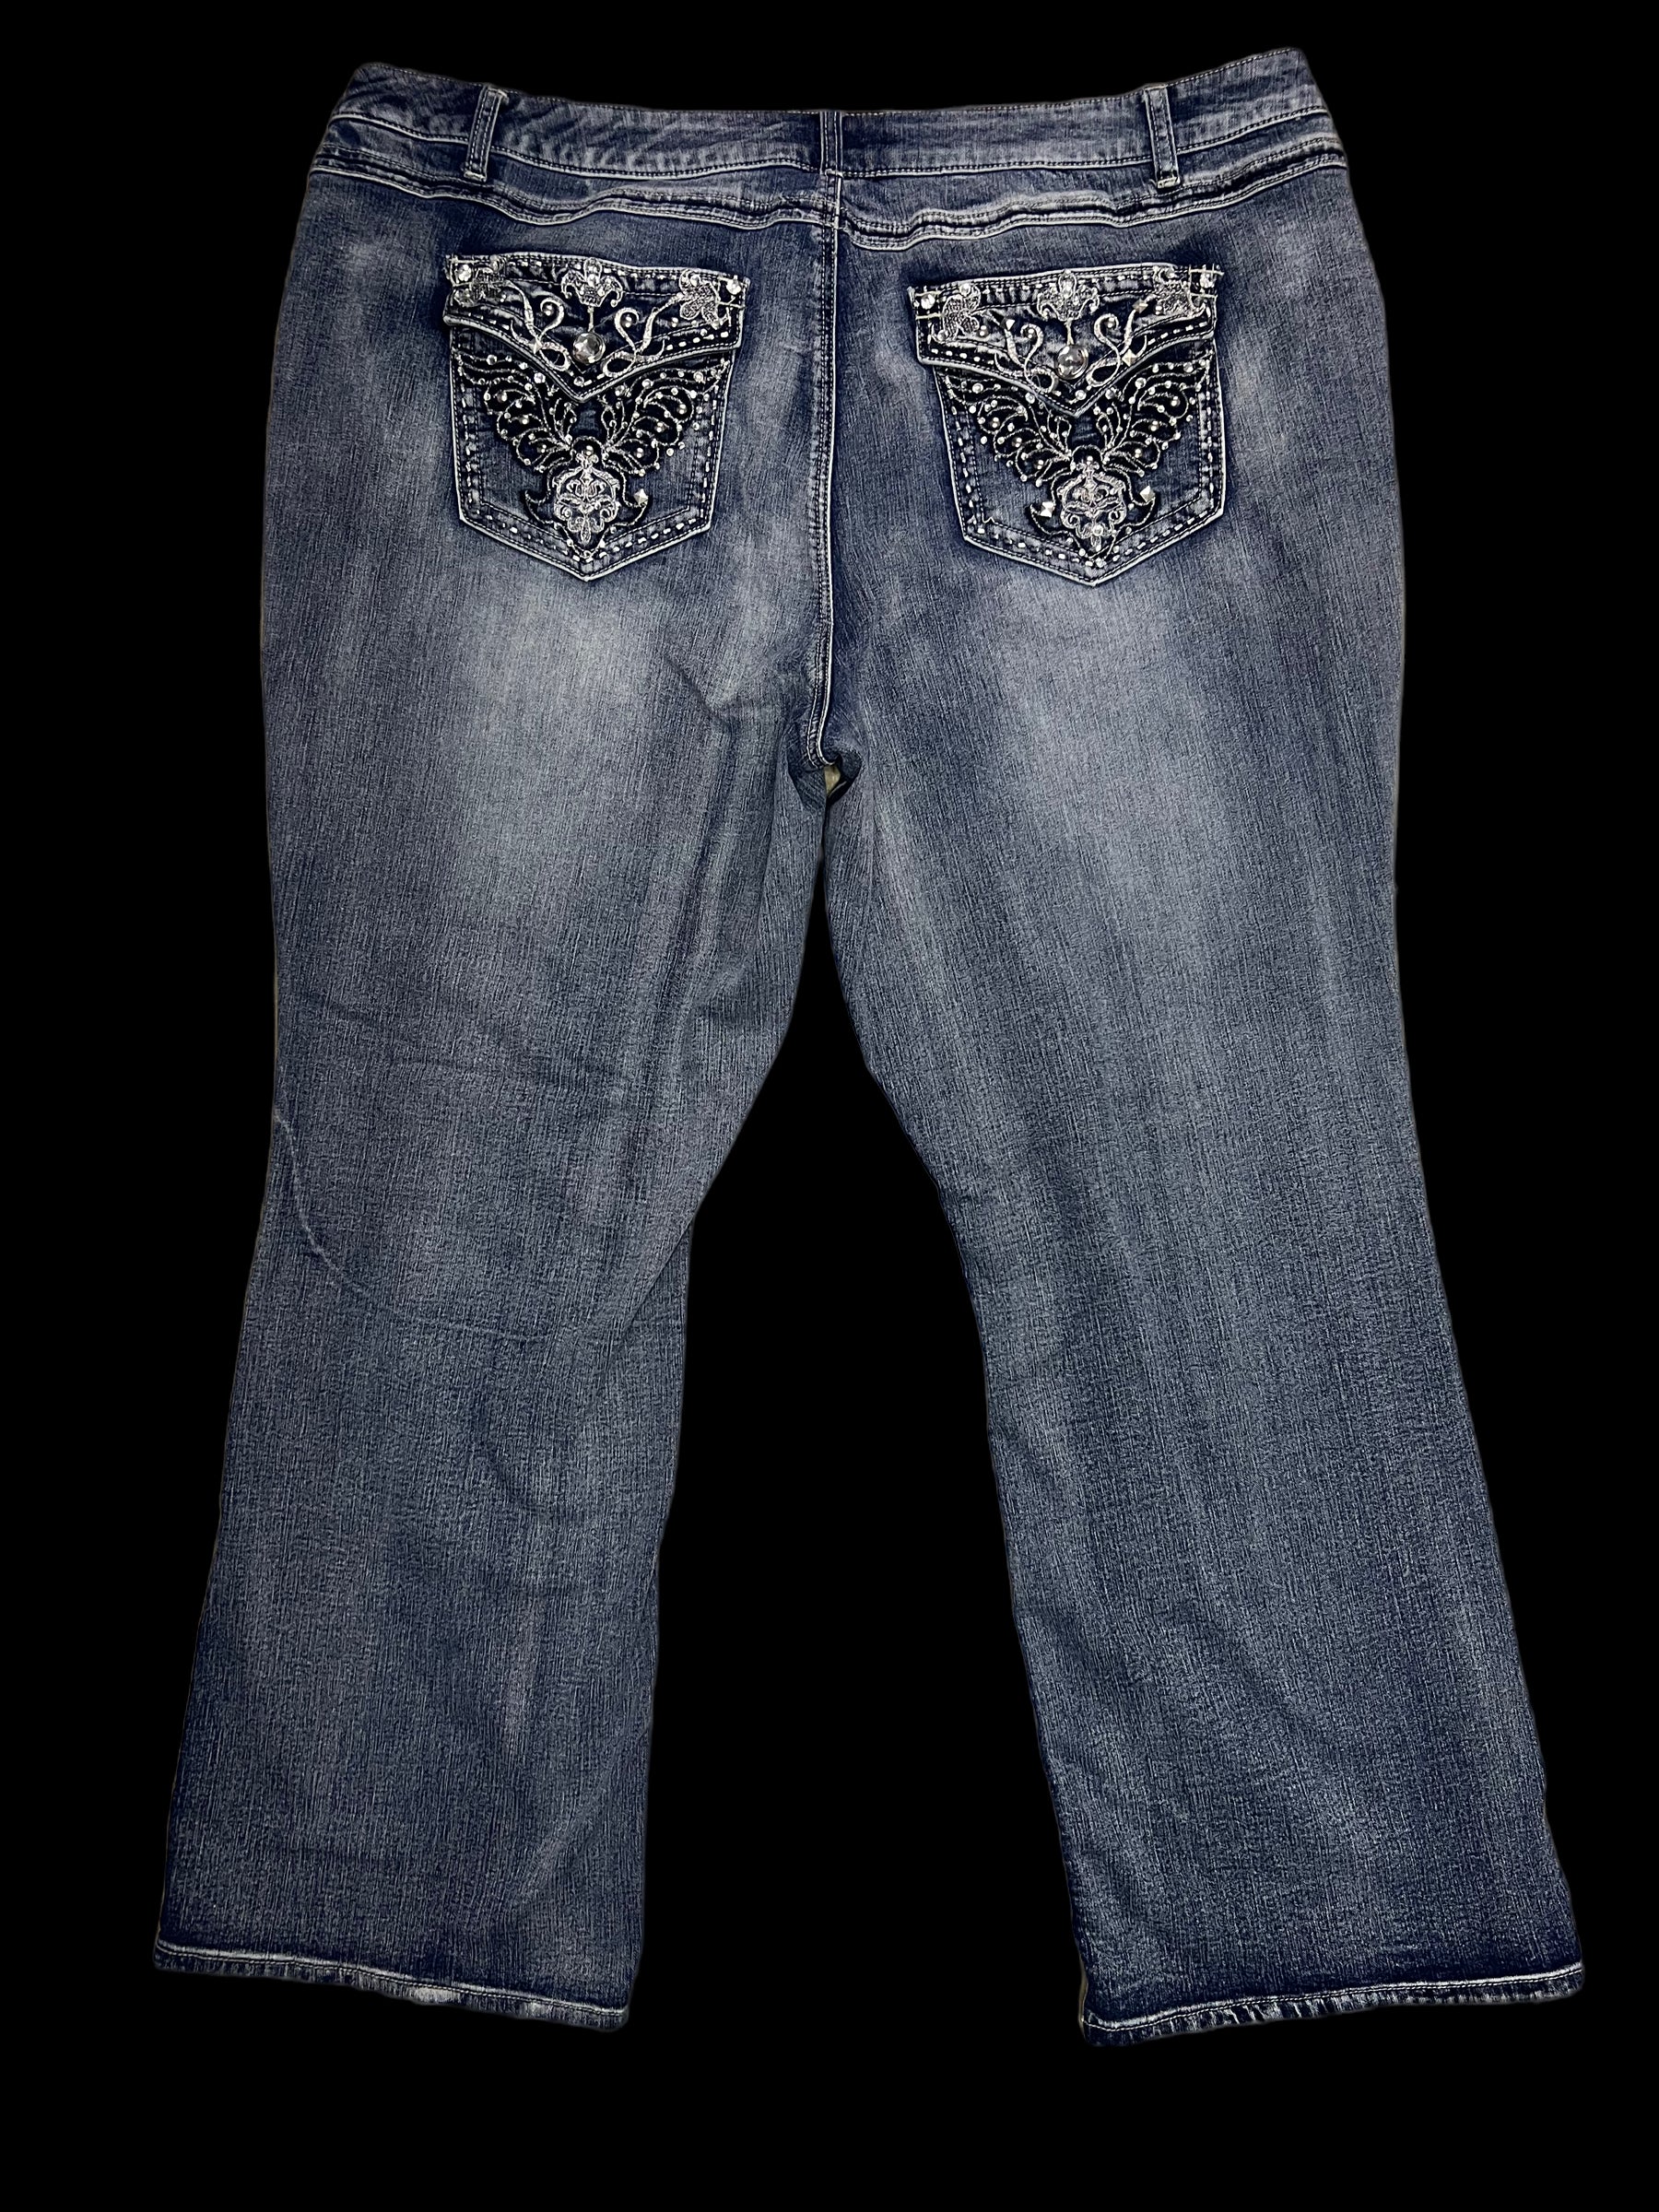 Plus-size embellished jeans – lagirlverse